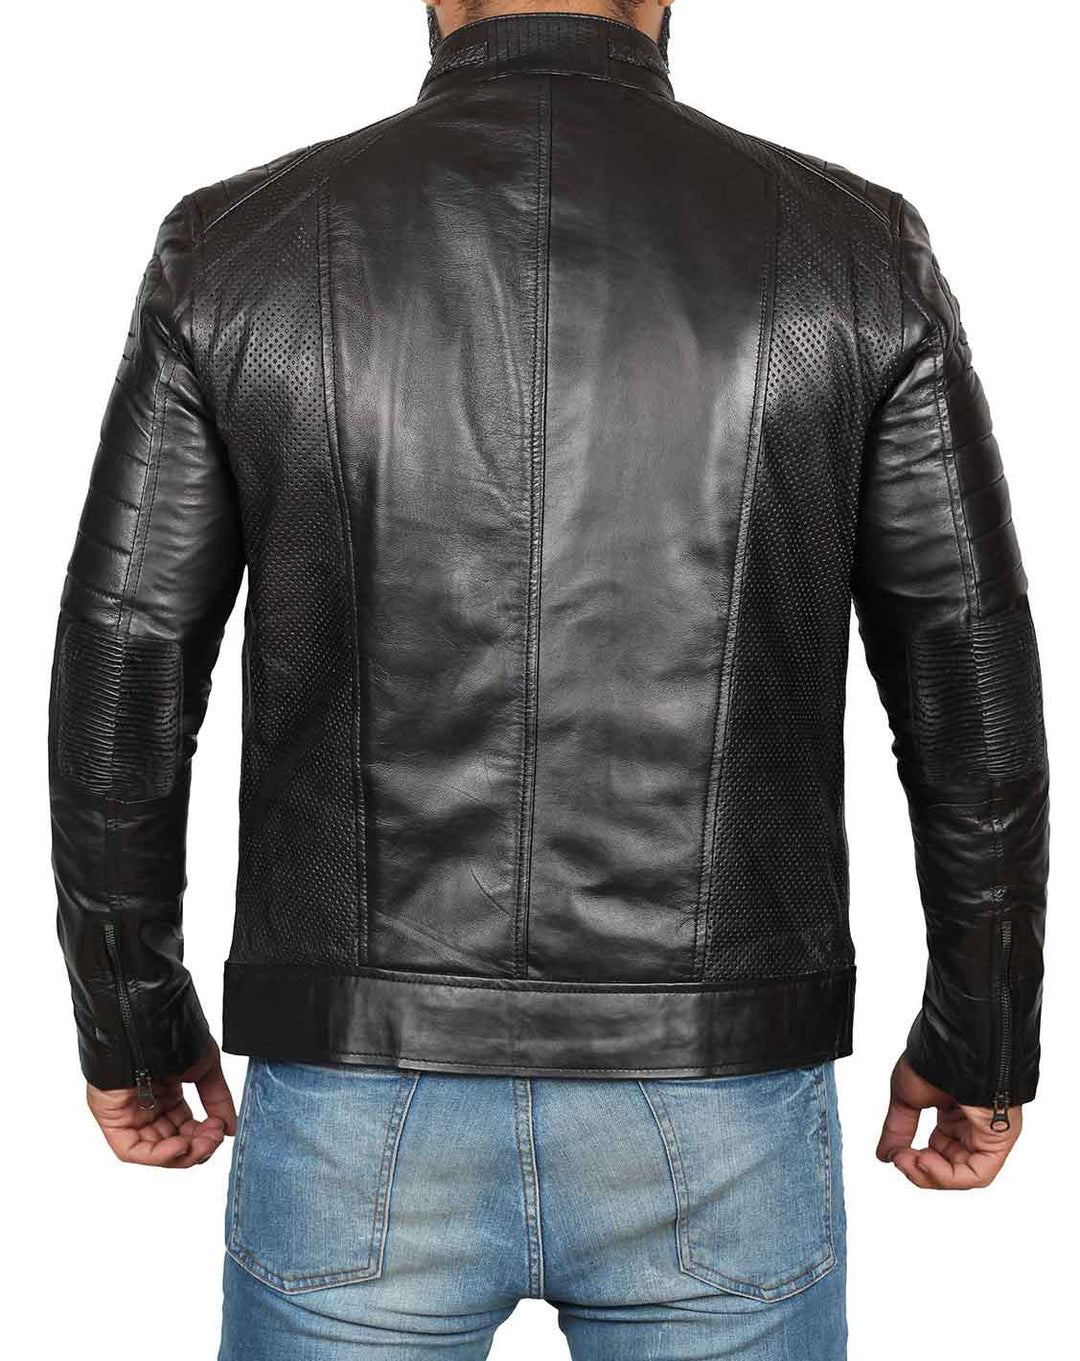 Austin Mens Black Cafe Racer Style Leather Jacket